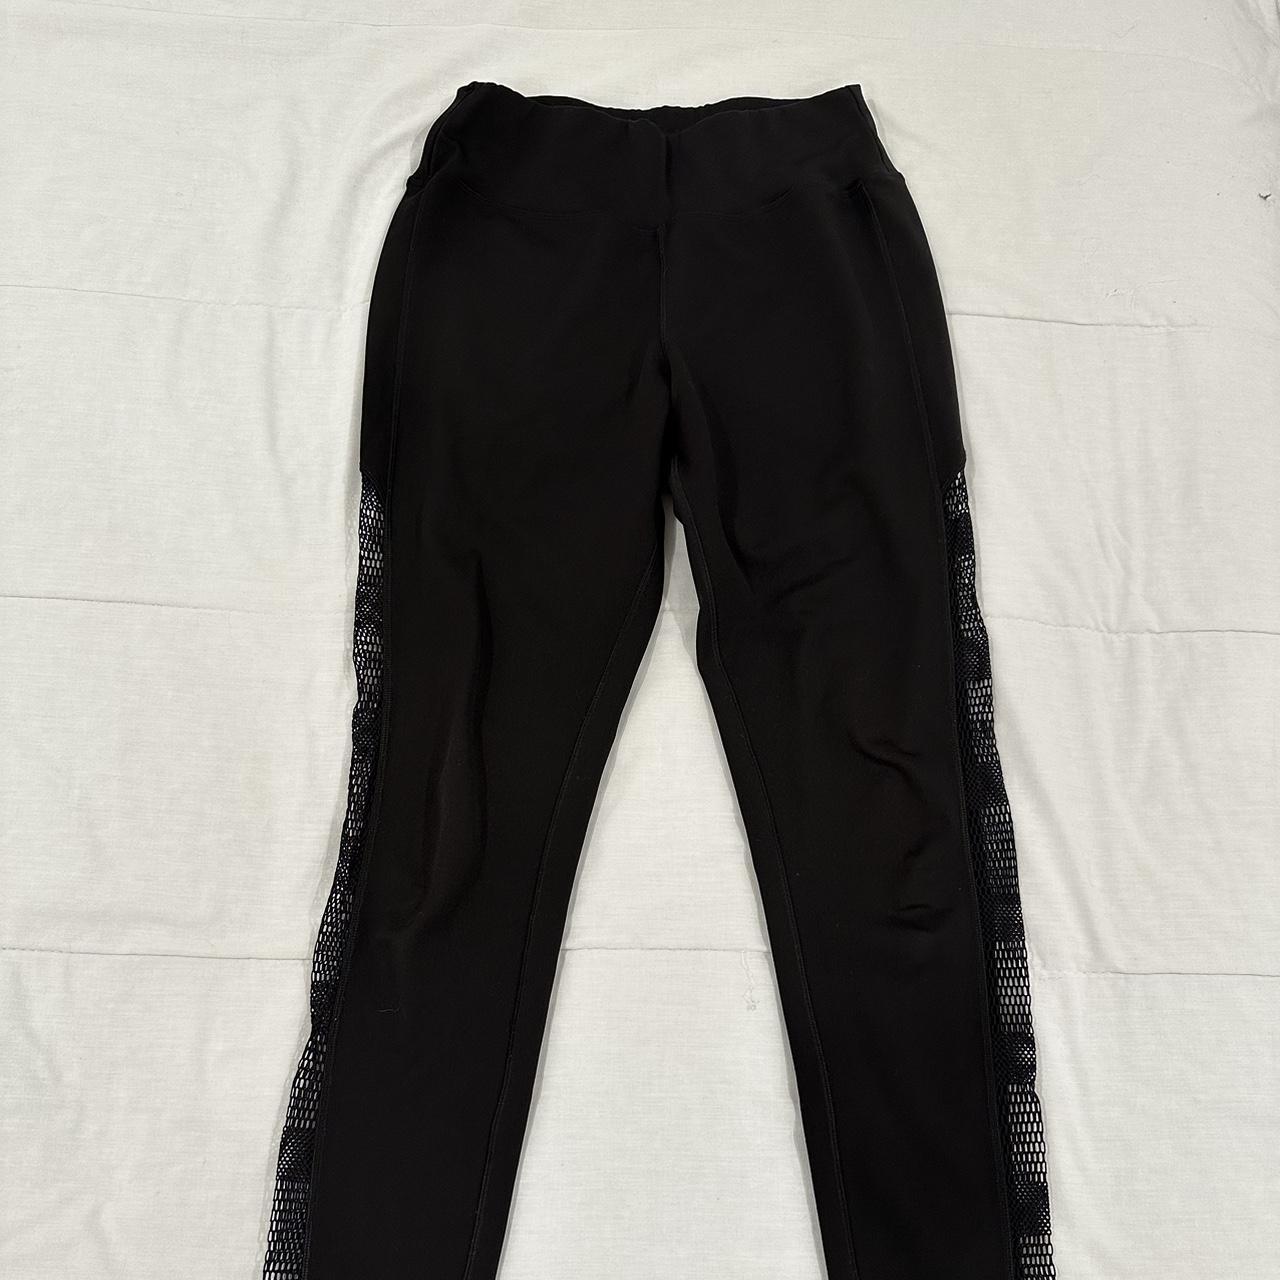 PopFit black/mesh leggings. Super comfortable and